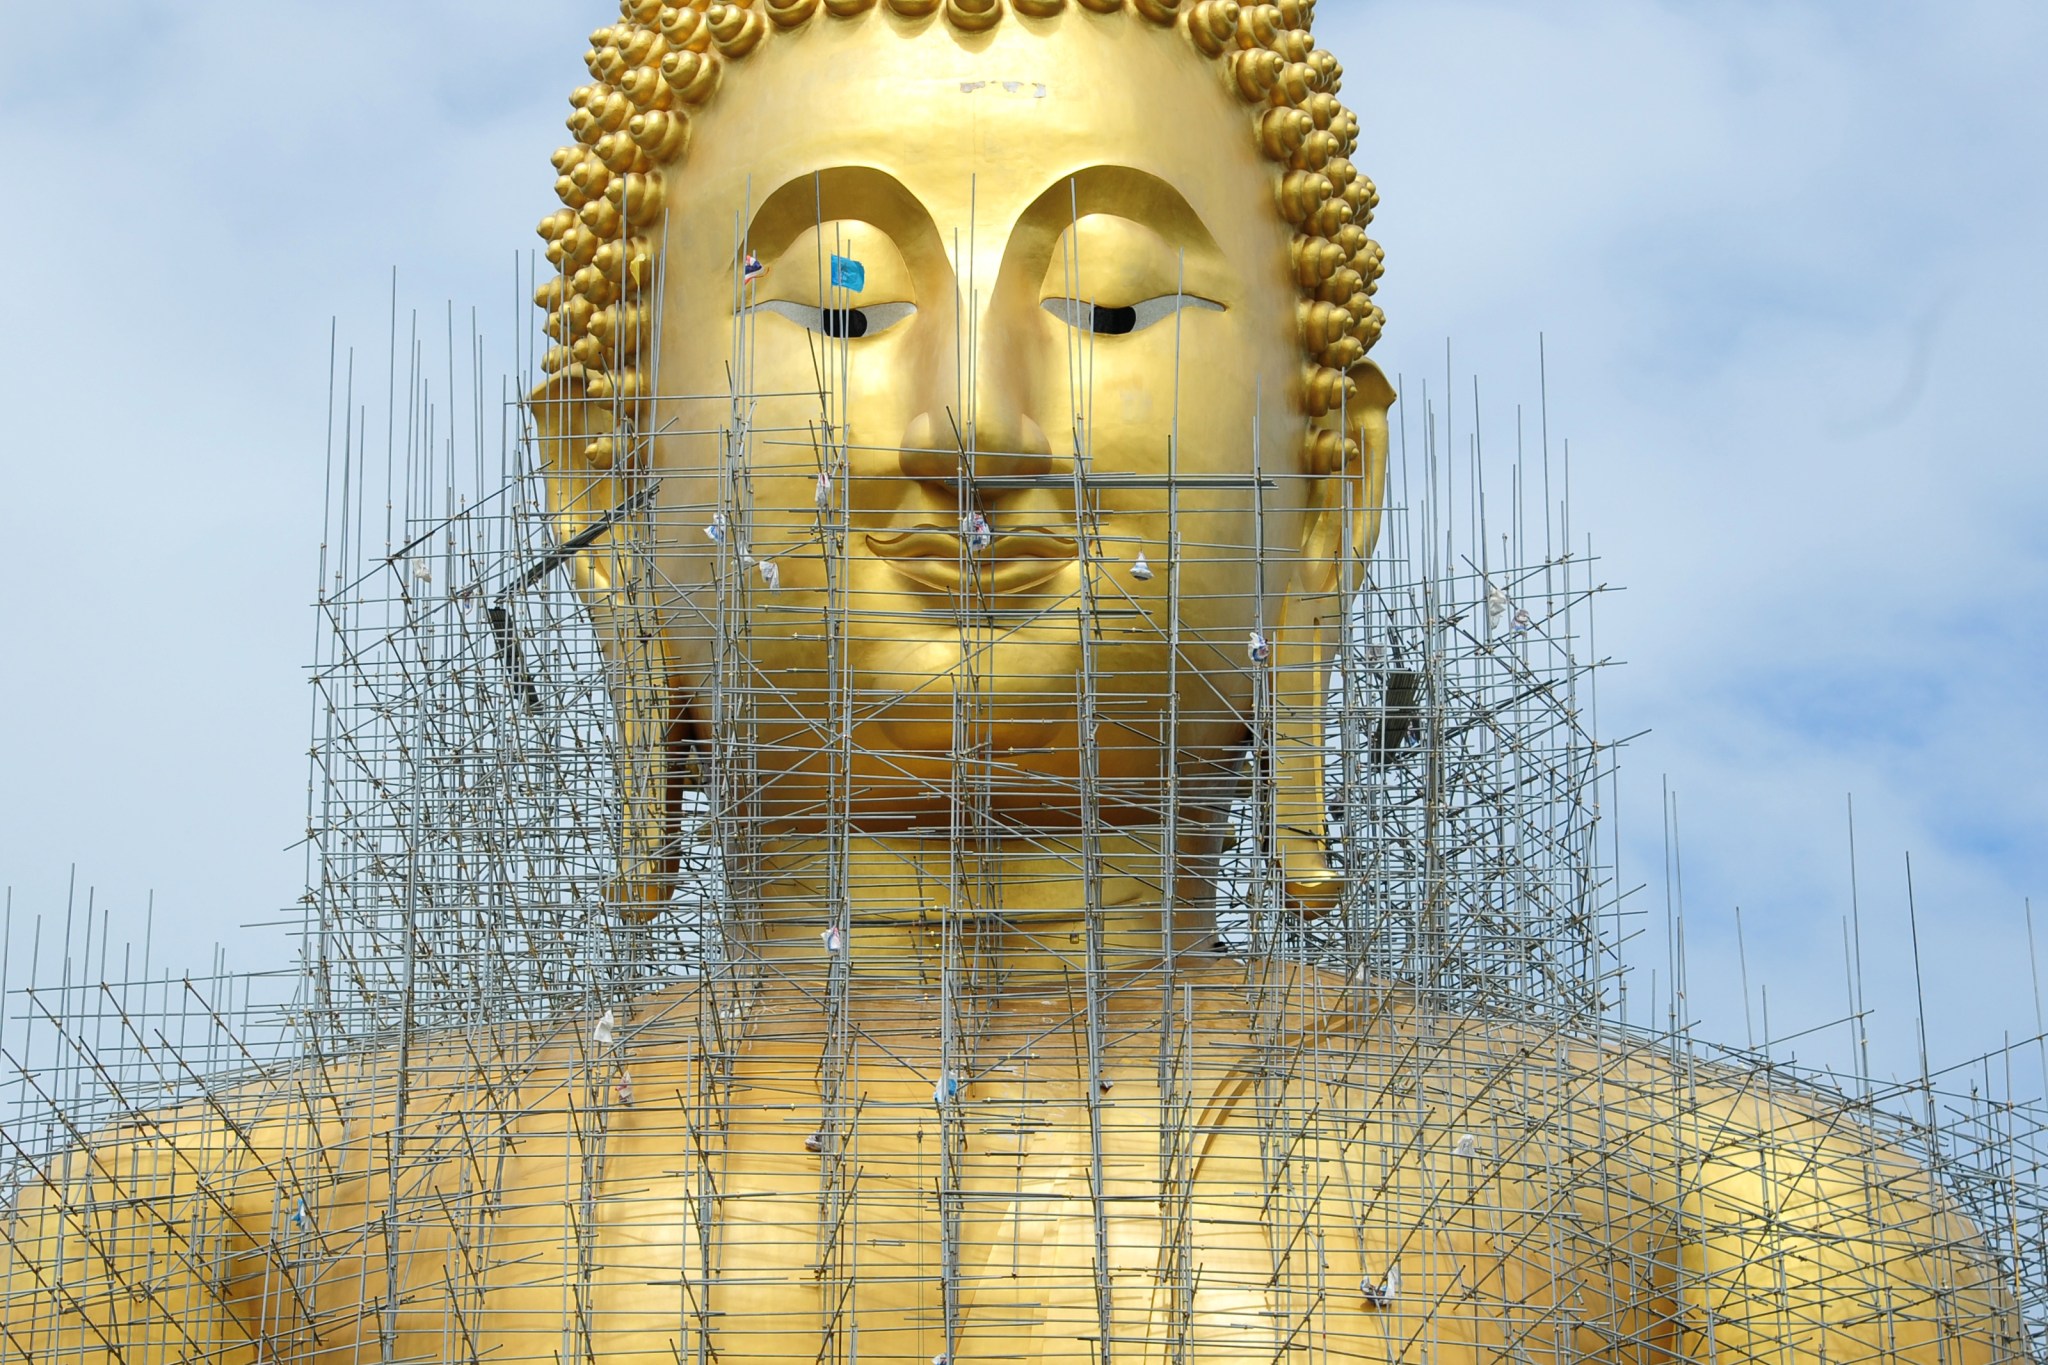 Buddha statue under renovation